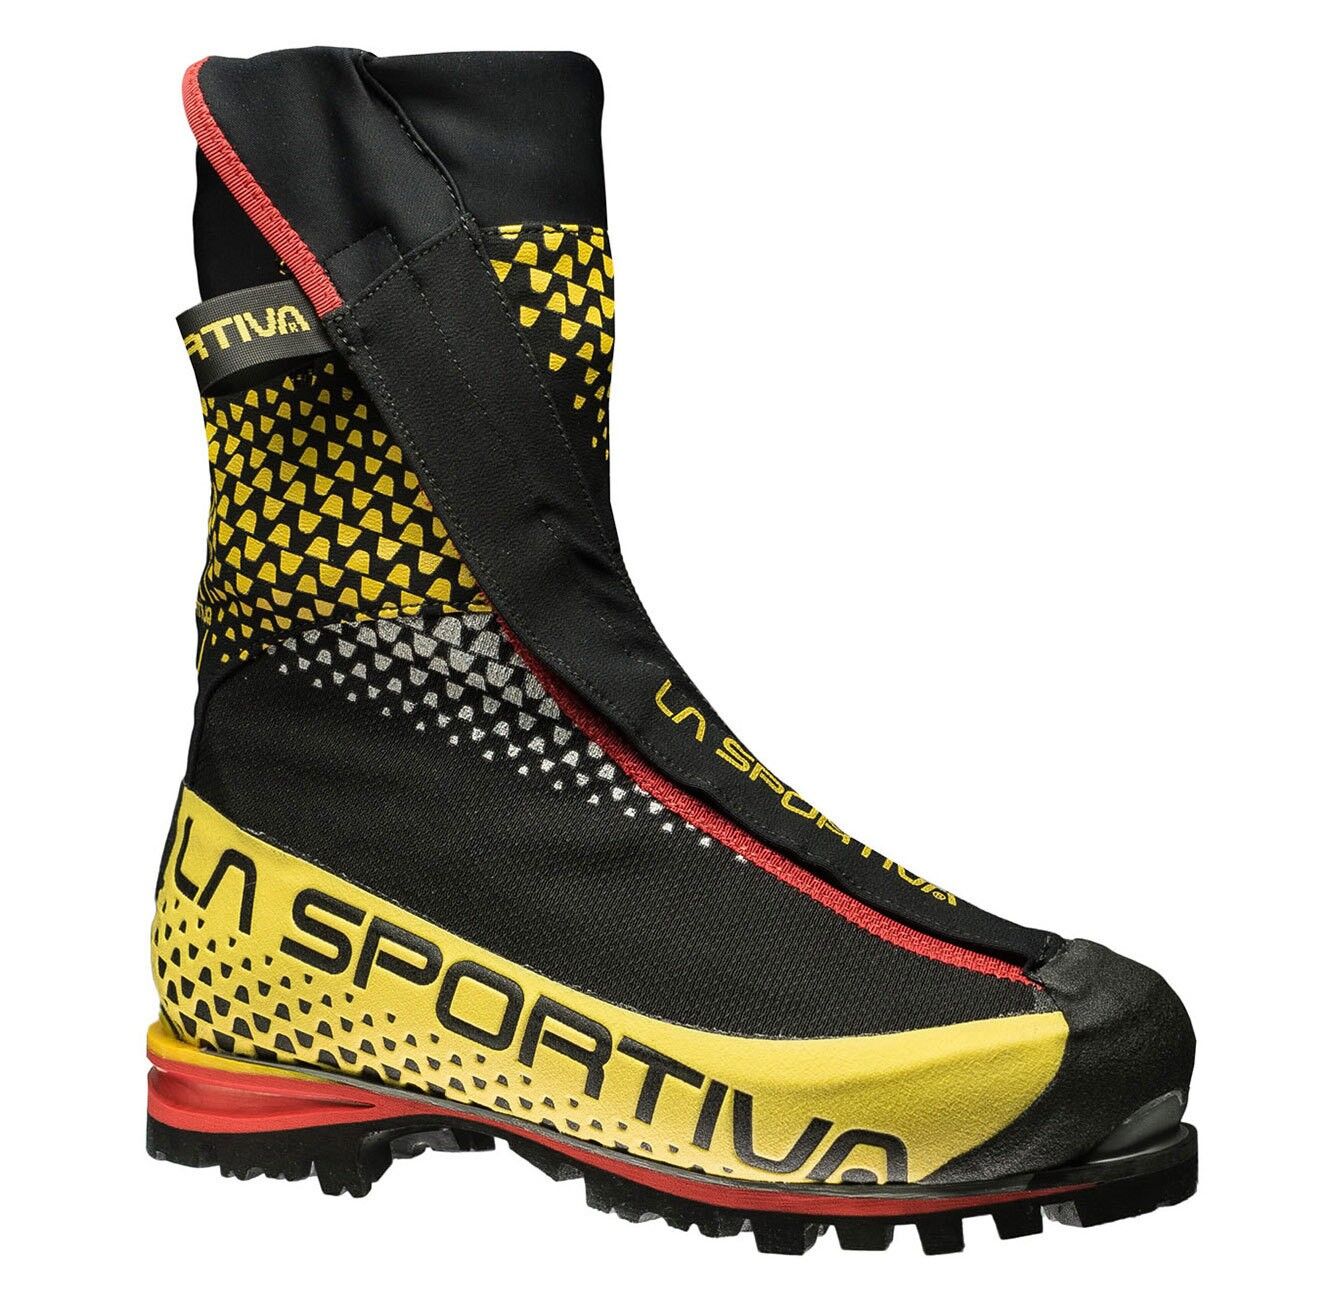 La Sportiva G5 - Mountaineering boots